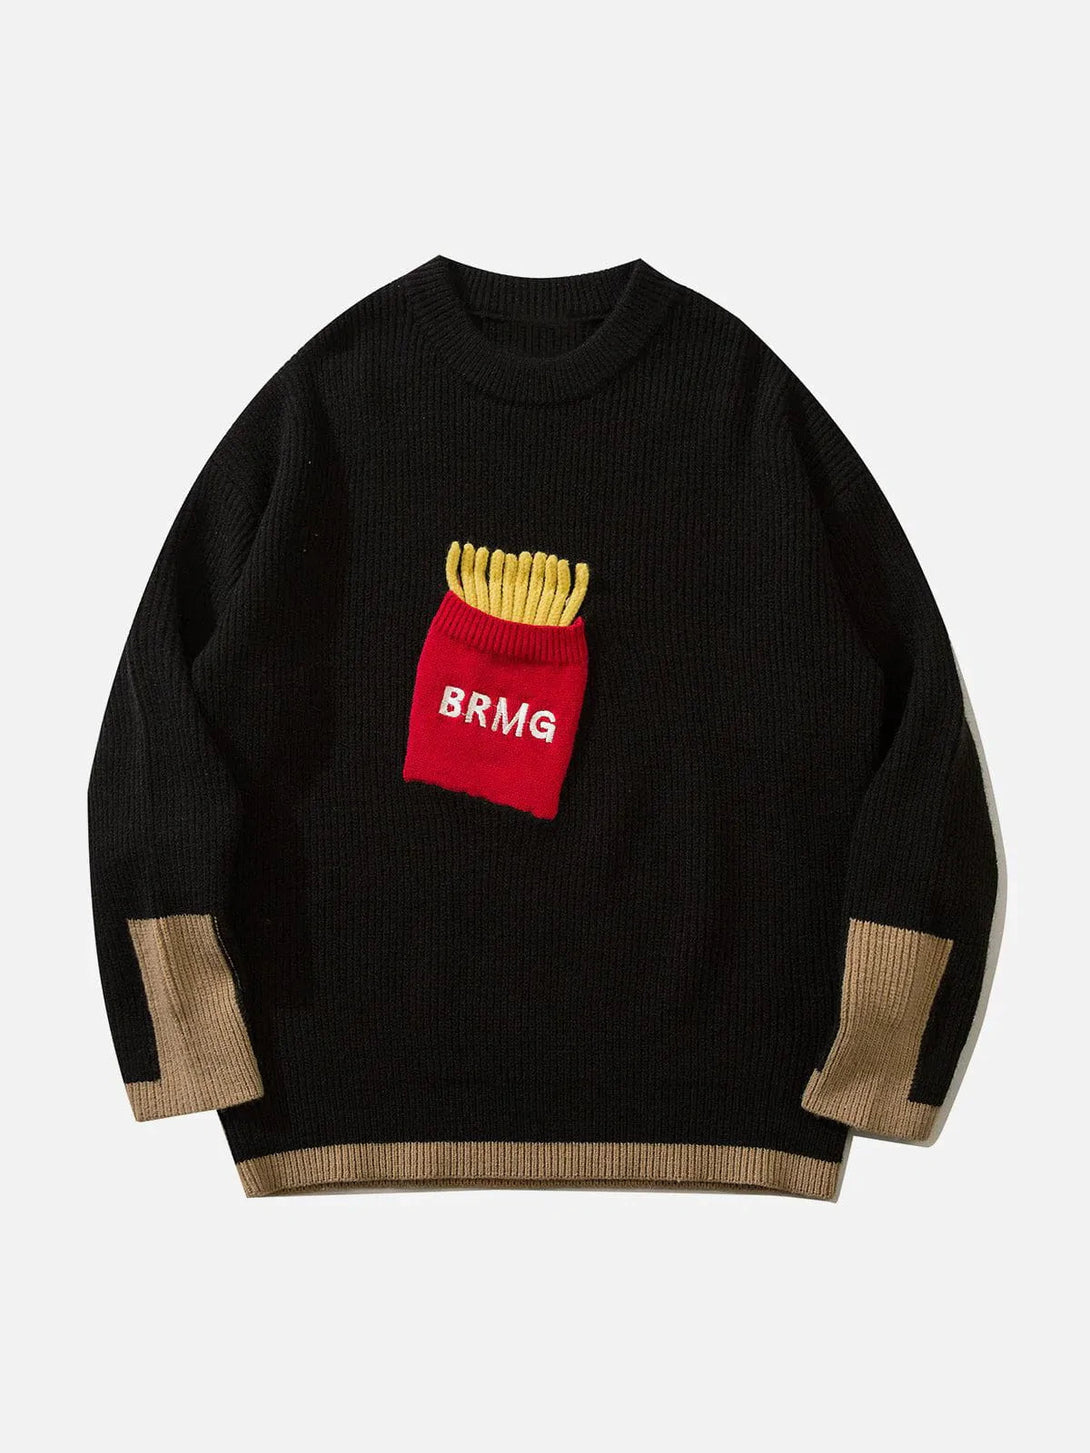 Majesda® - Three-Dimensional Fries Sweater outfit ideas streetwear fashion